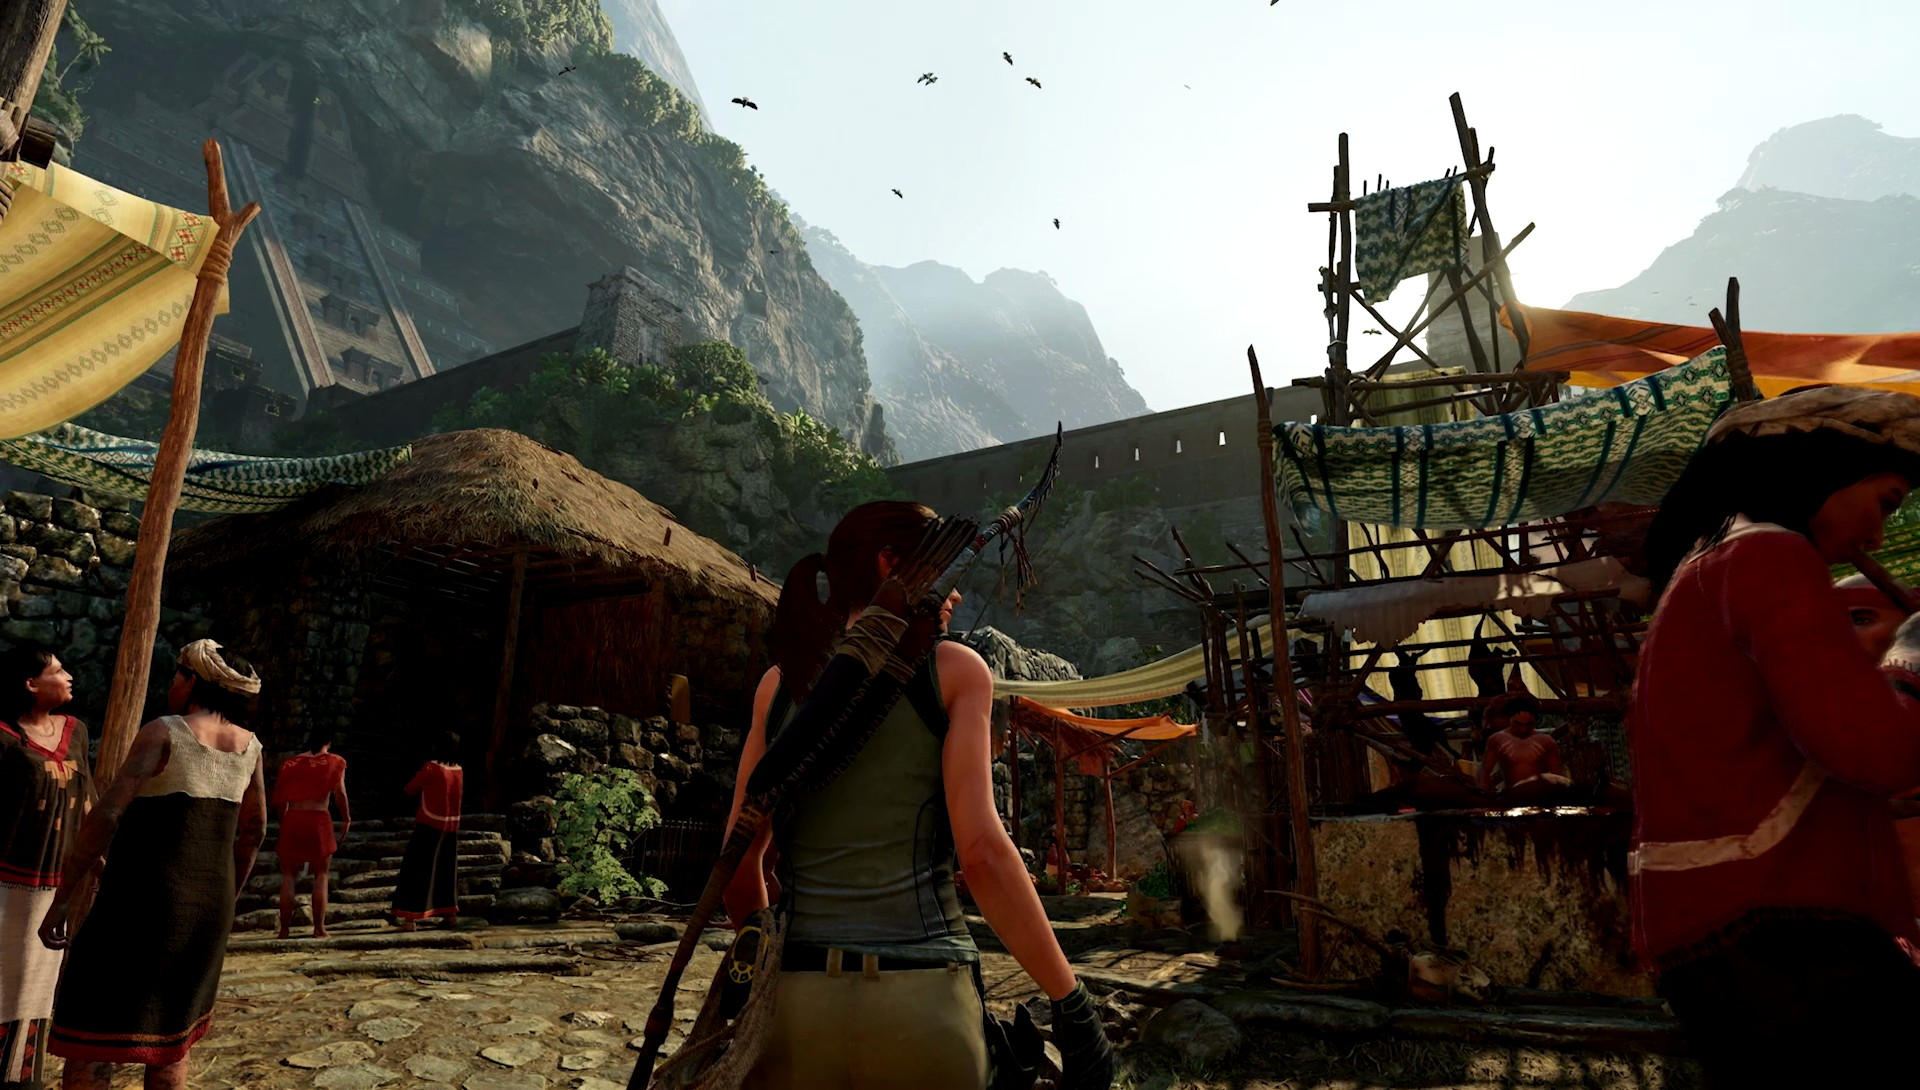 Скриншот: сцена из игры Shadow of the Tomb Raider